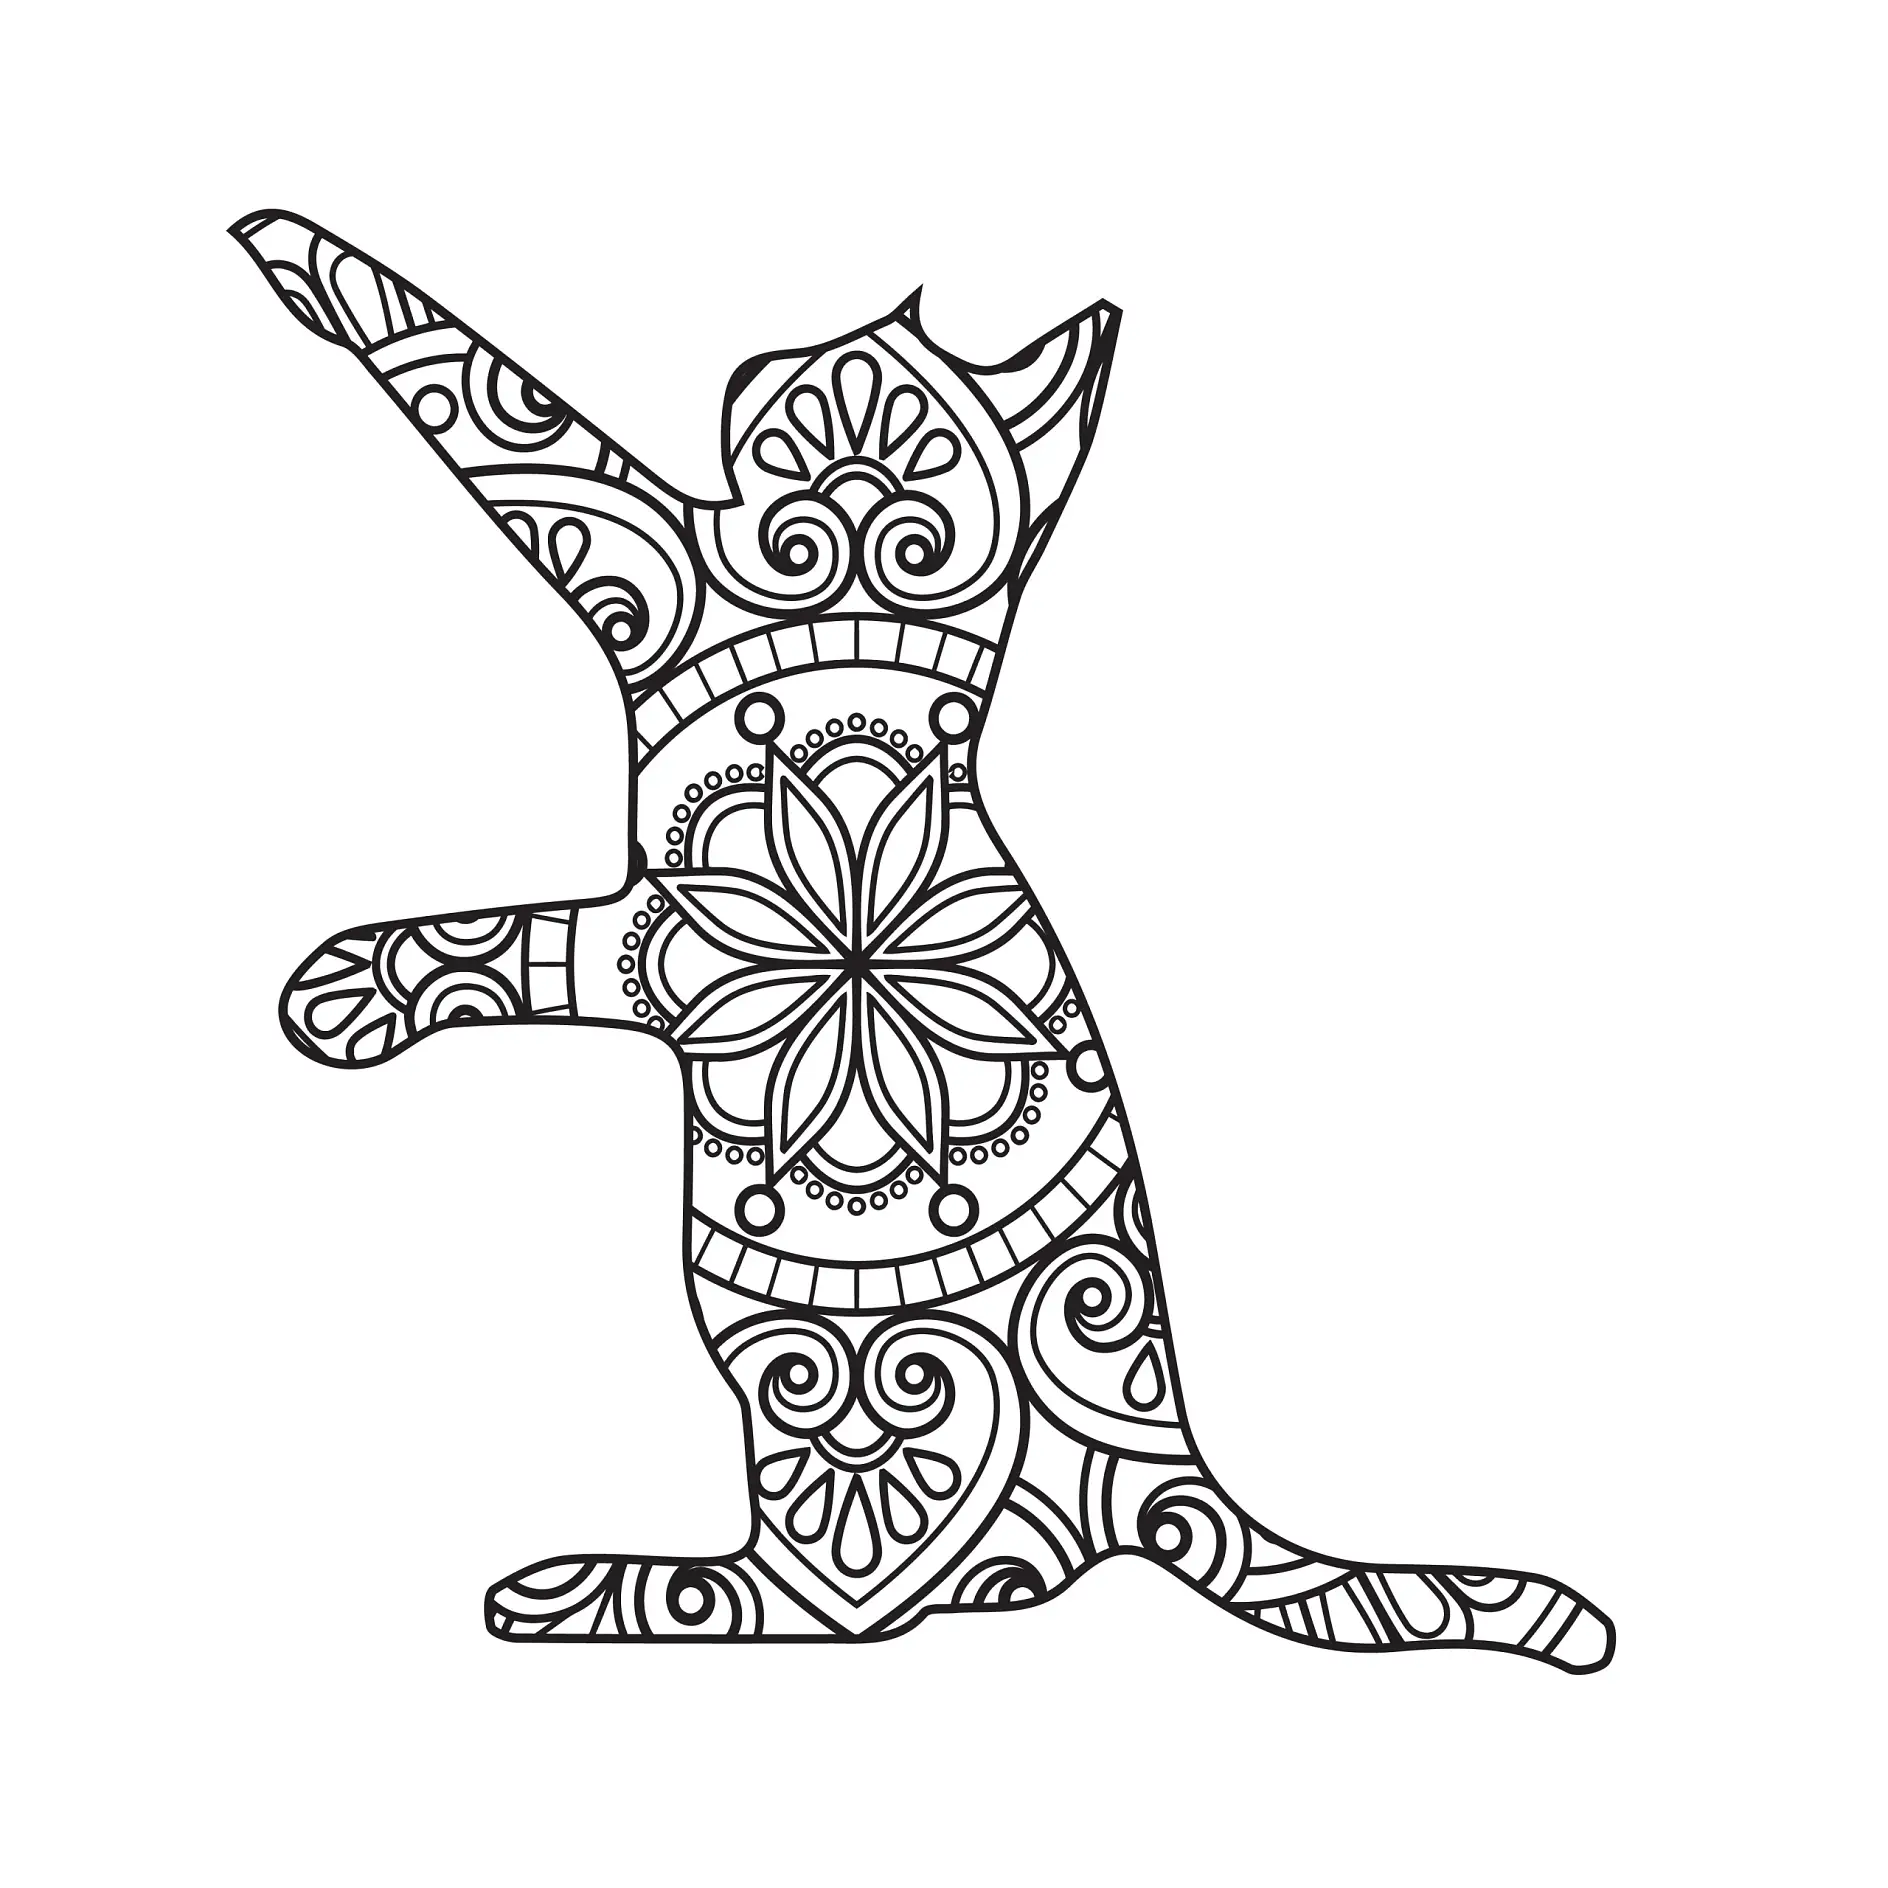 Ausmalbild Mandala mit Katze und abstrakten Mustern